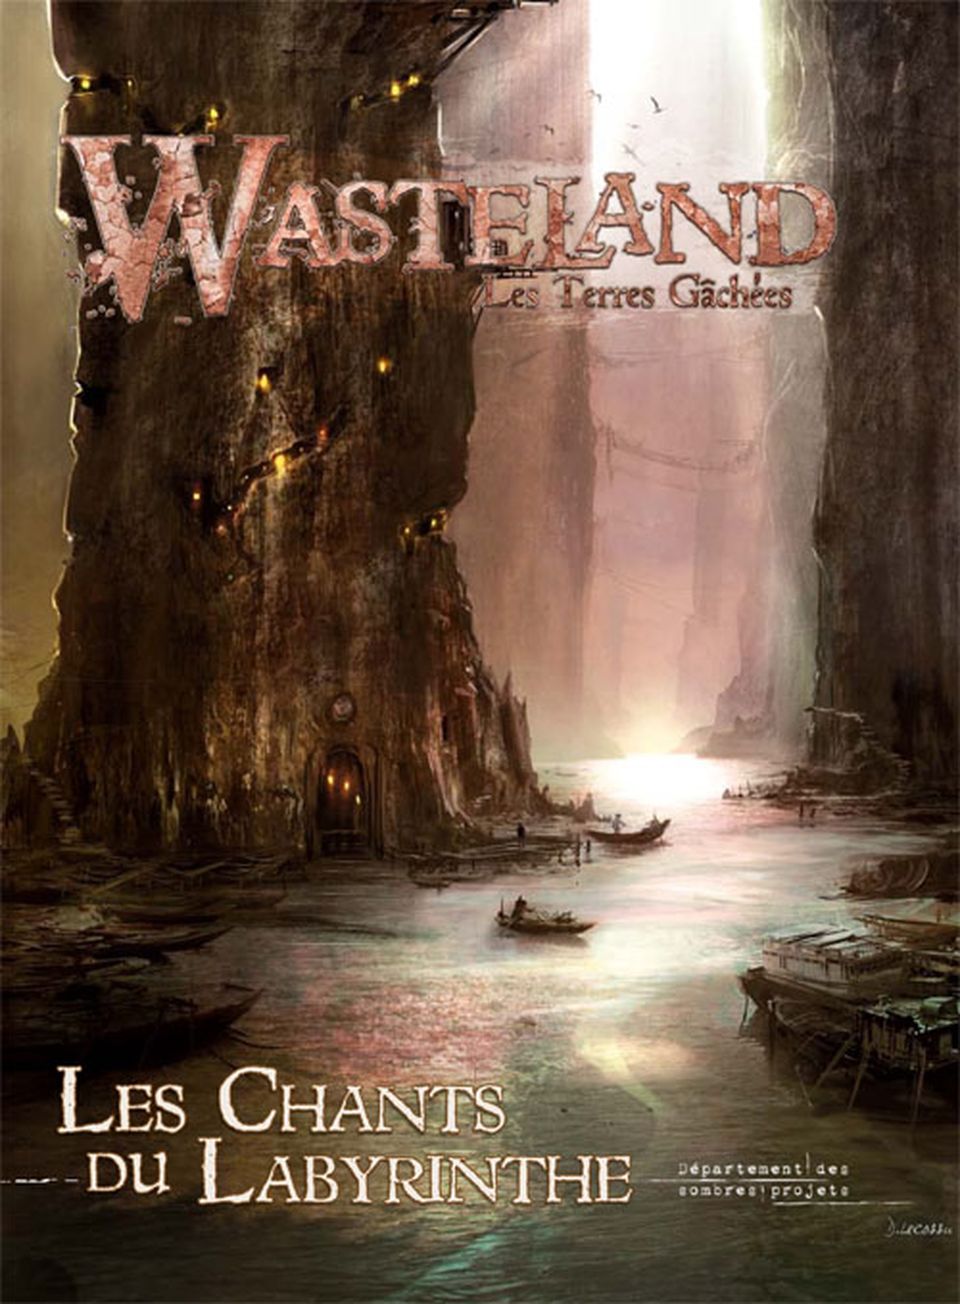 Wasteland : Les Chants du Labyrinthe image